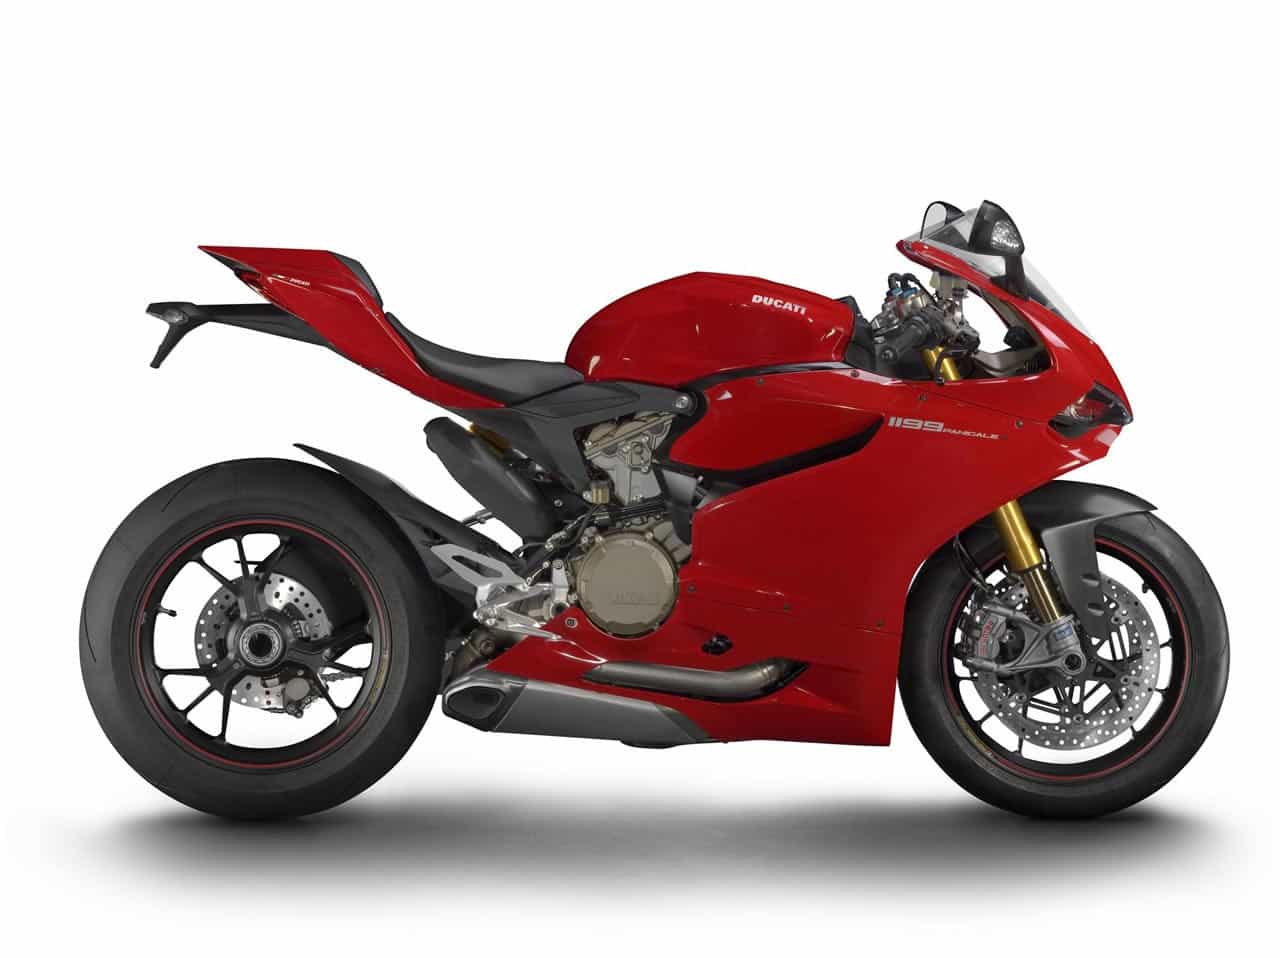 2012 Ducati 1199 Panigale Superbike 5